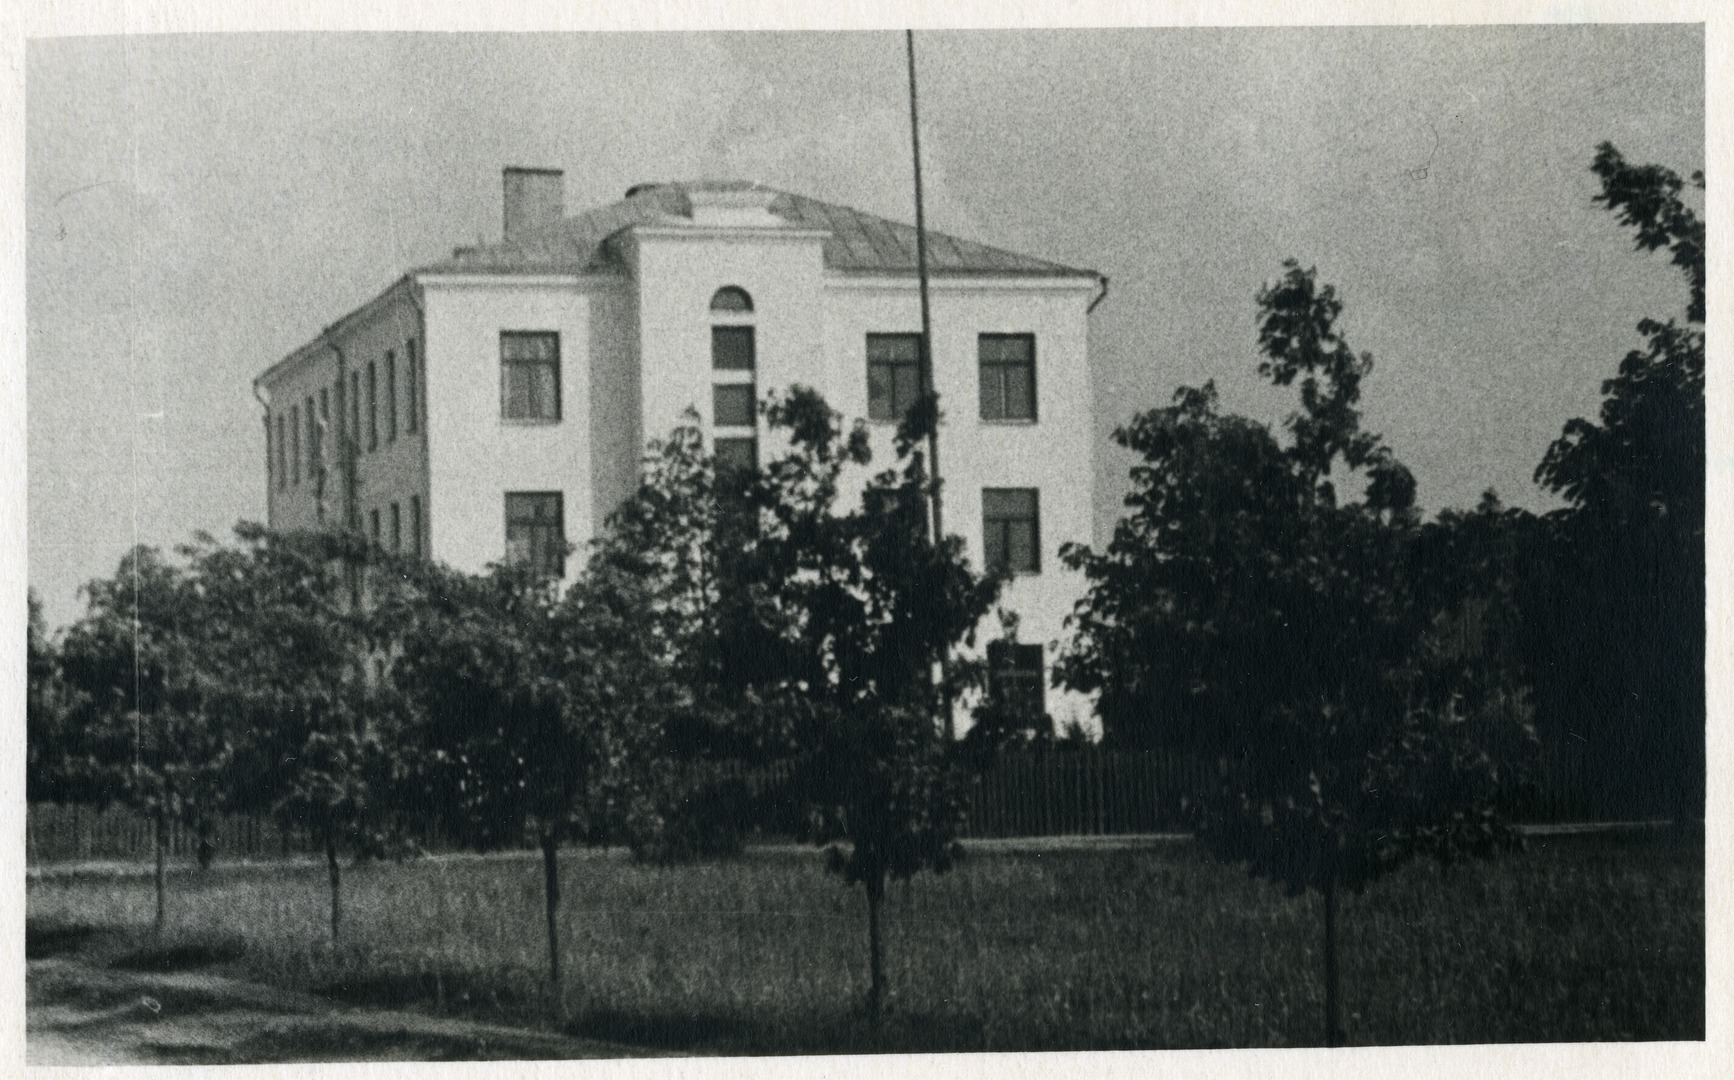 Mustla Secondary School building